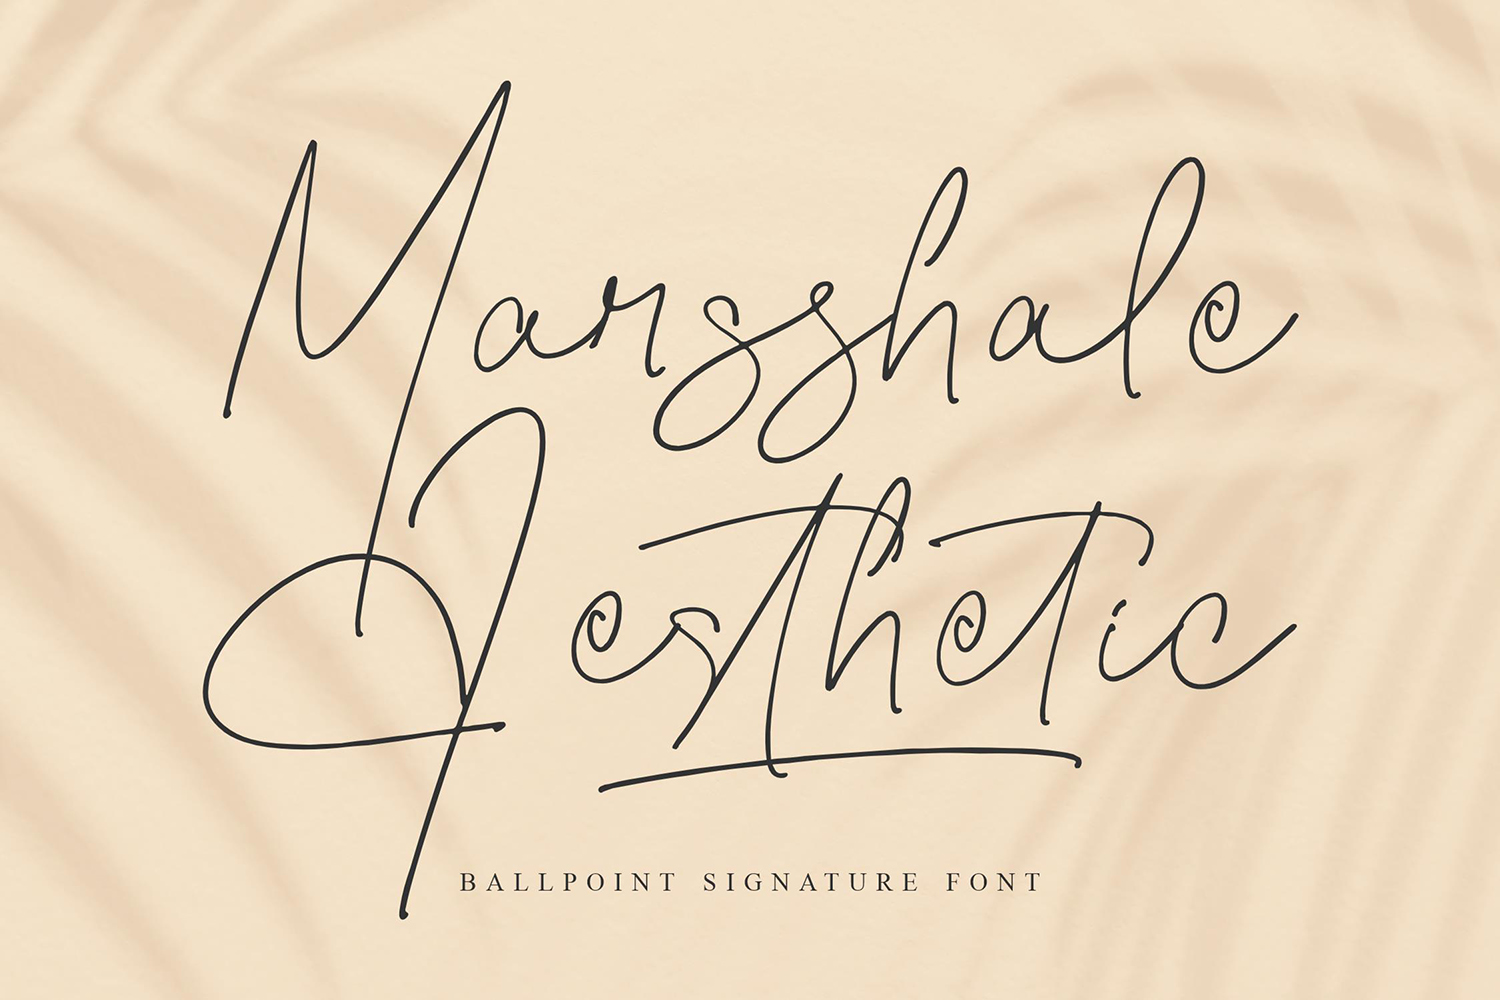 Marsshale Aesthetic Free Font